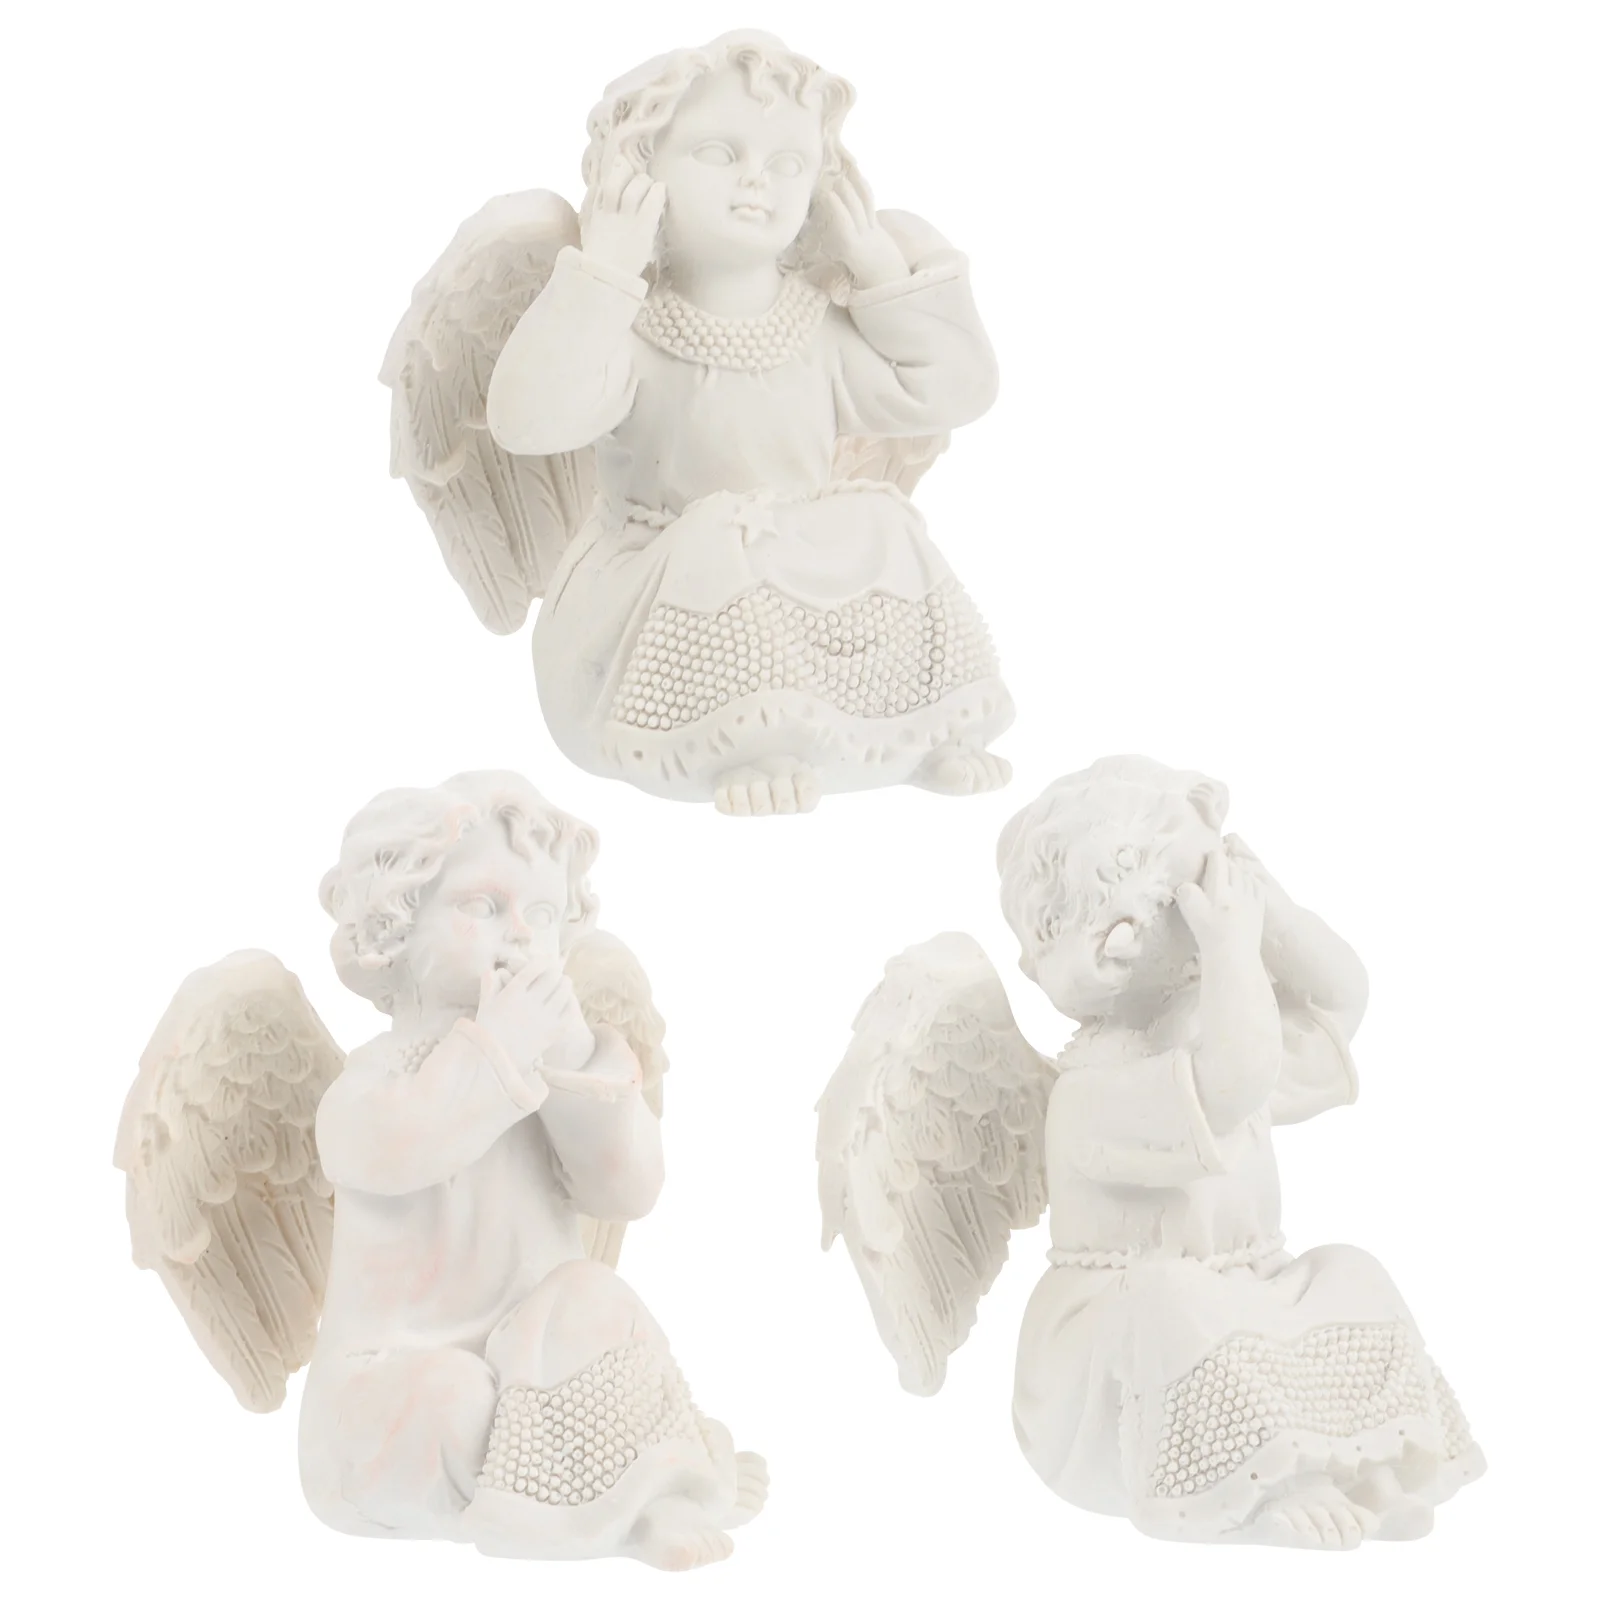 

Garden Angel Statue Figurine Cherub Figurines Statues Angels Sculpture Resin Outdoor Ornaments Baby Cherubs Praying Clown Decor